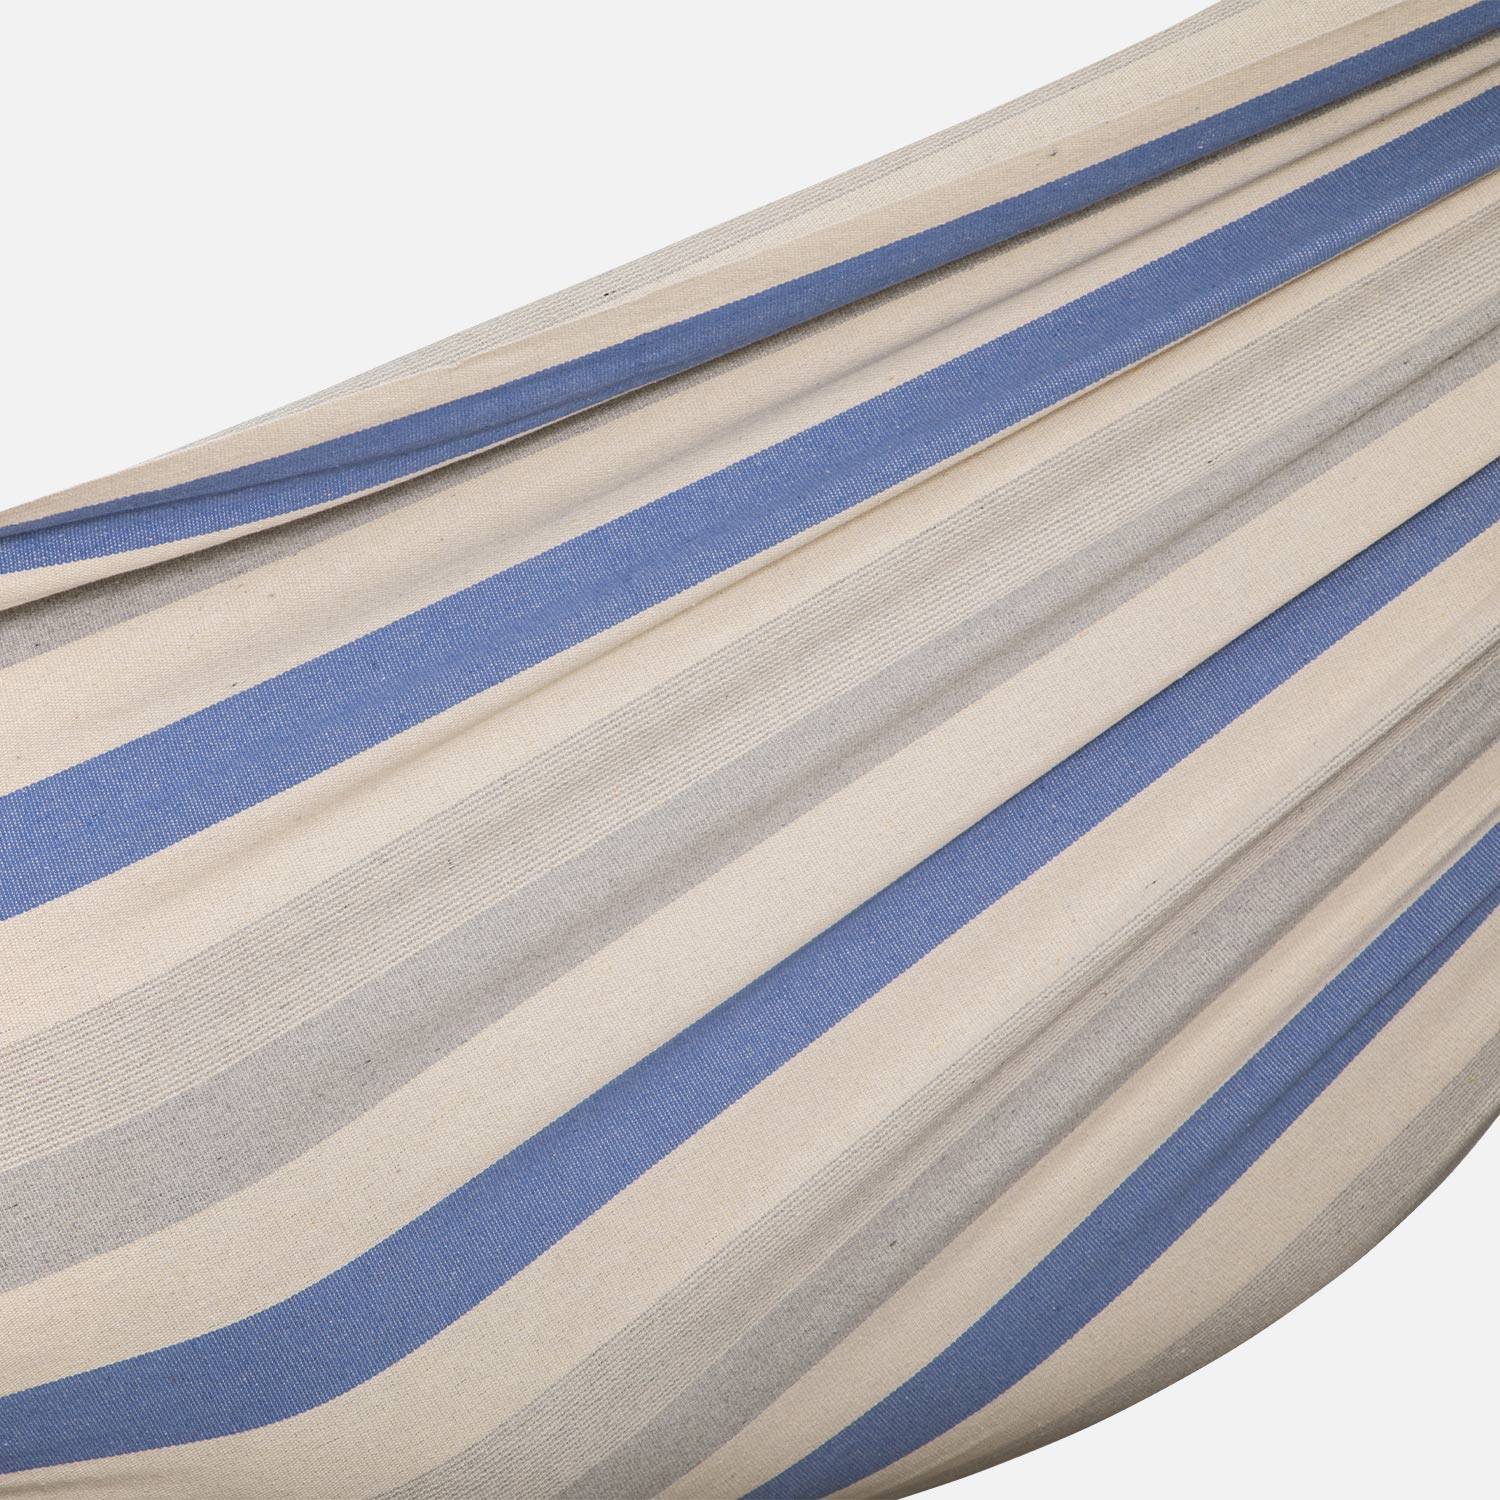 Funda de hamaca a rayas - azul turquesa / gris claro / crudo, 1 persona, 100% polialgodón, 220x140cm Photo5